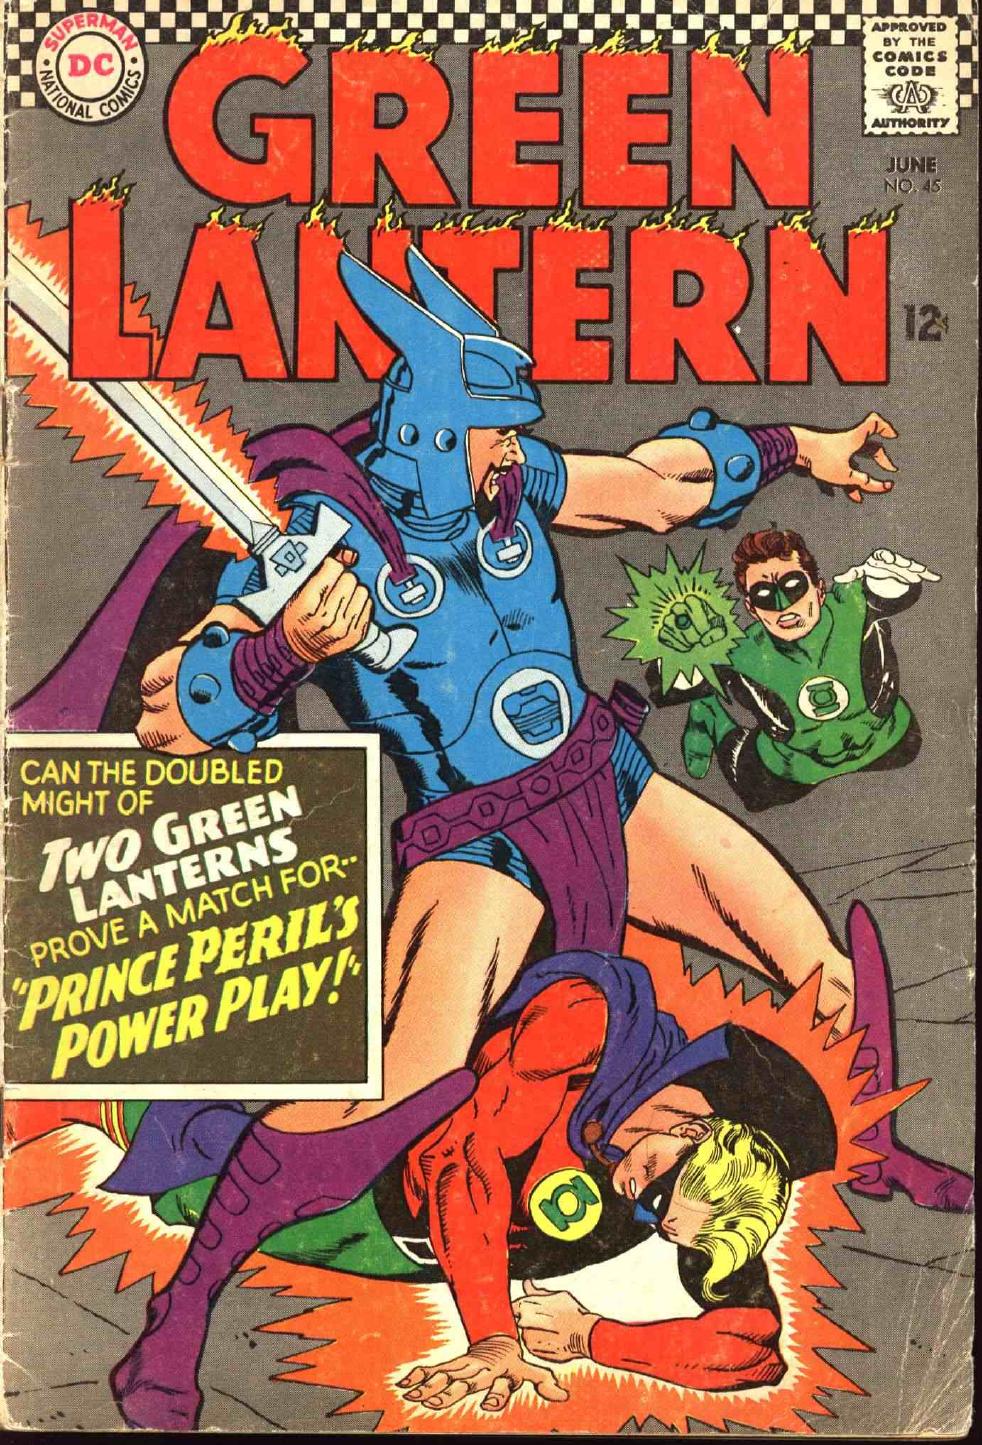 Green Lantern. 45. Cover.